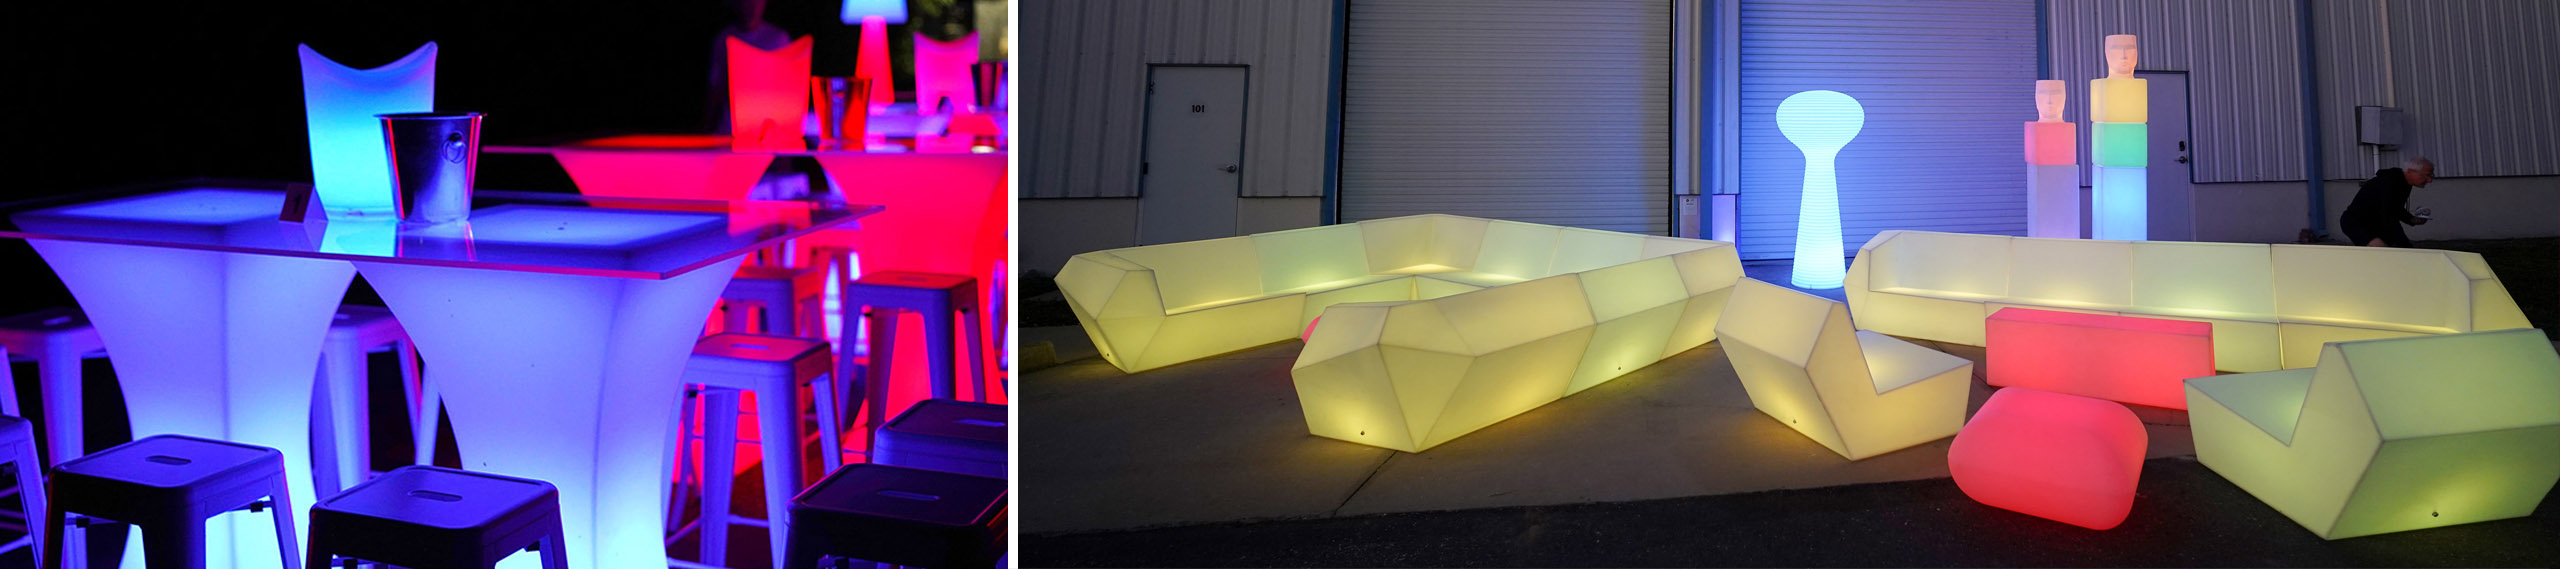 led-glow-lounge-setups